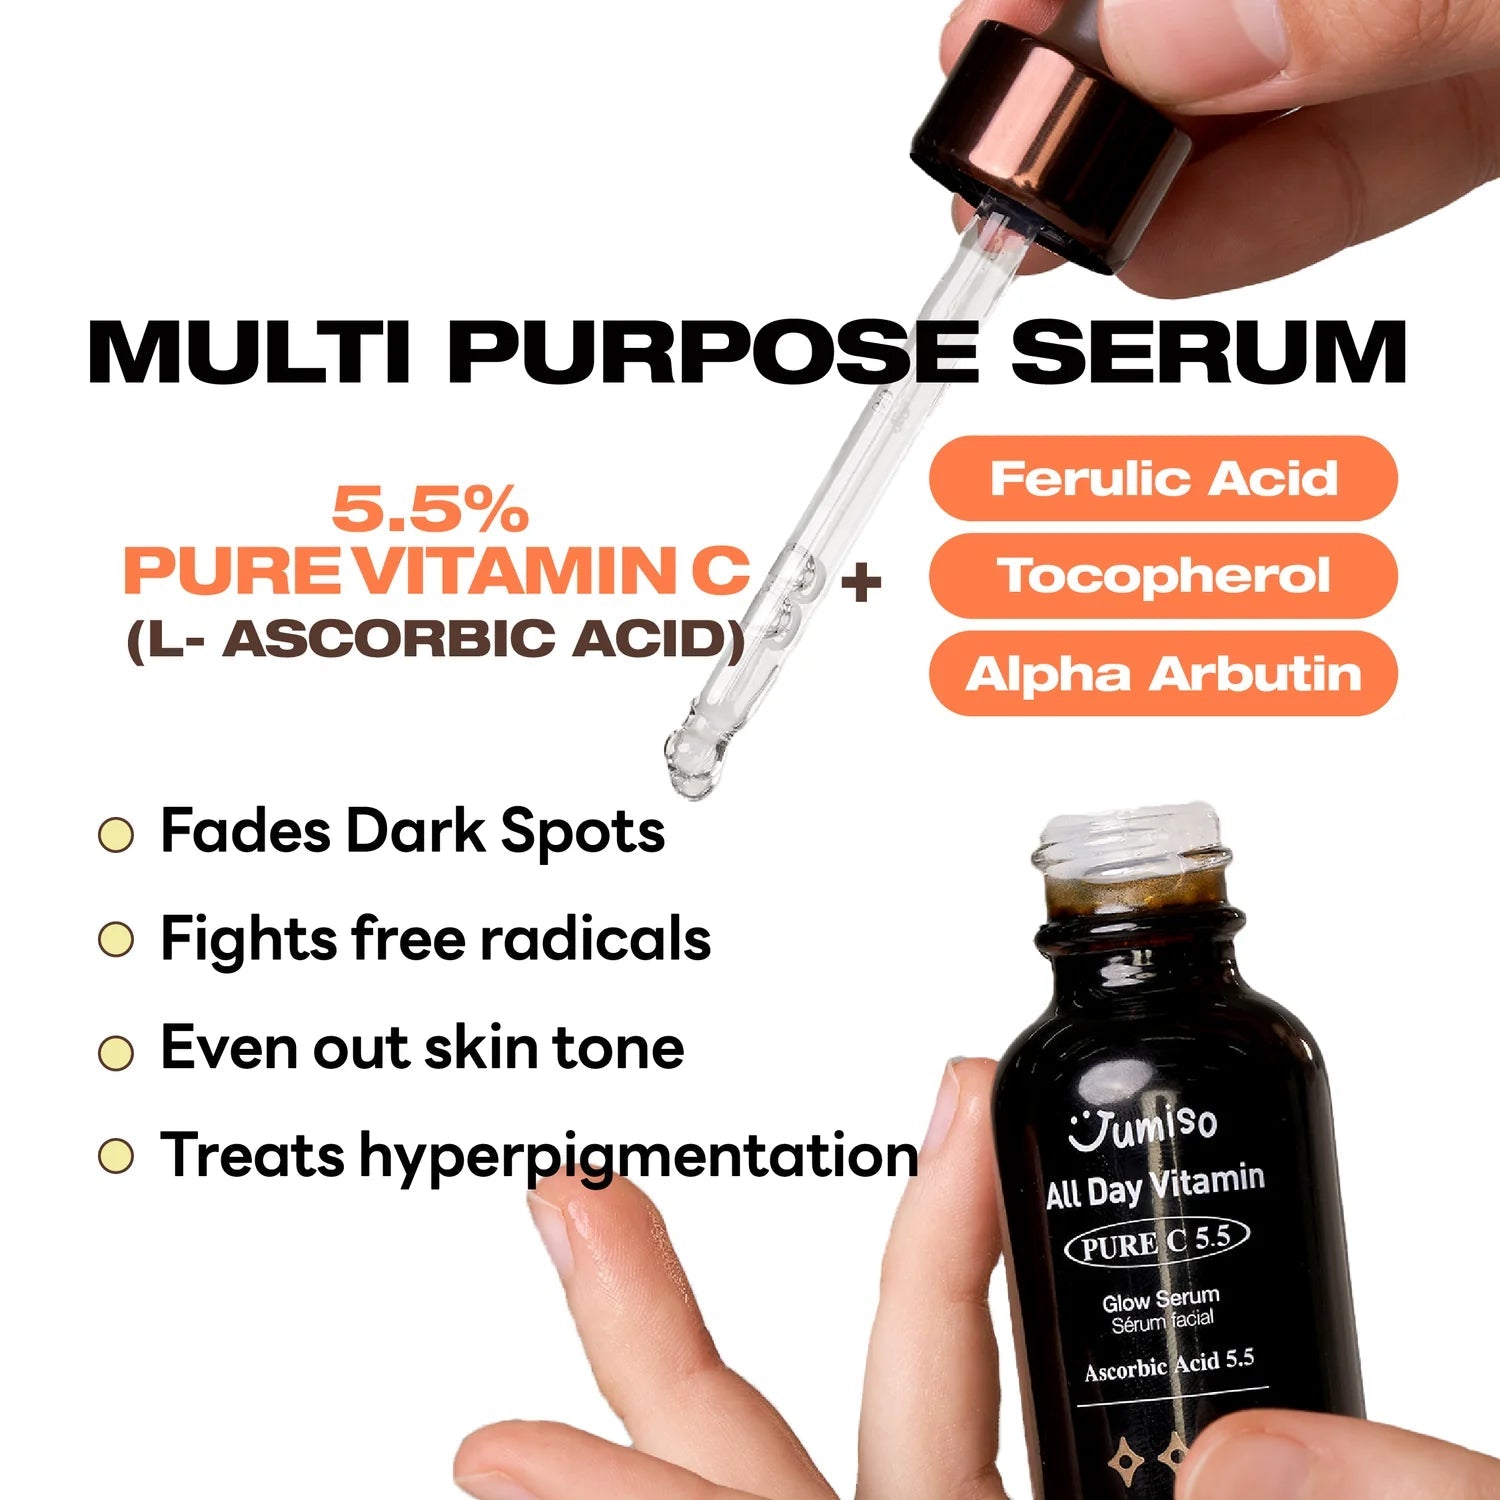 JUMISO All Day Vitamin Pure C 5.5 Glow Serum 30ml Skin Care JUMISO ORION XO Sri Lanka